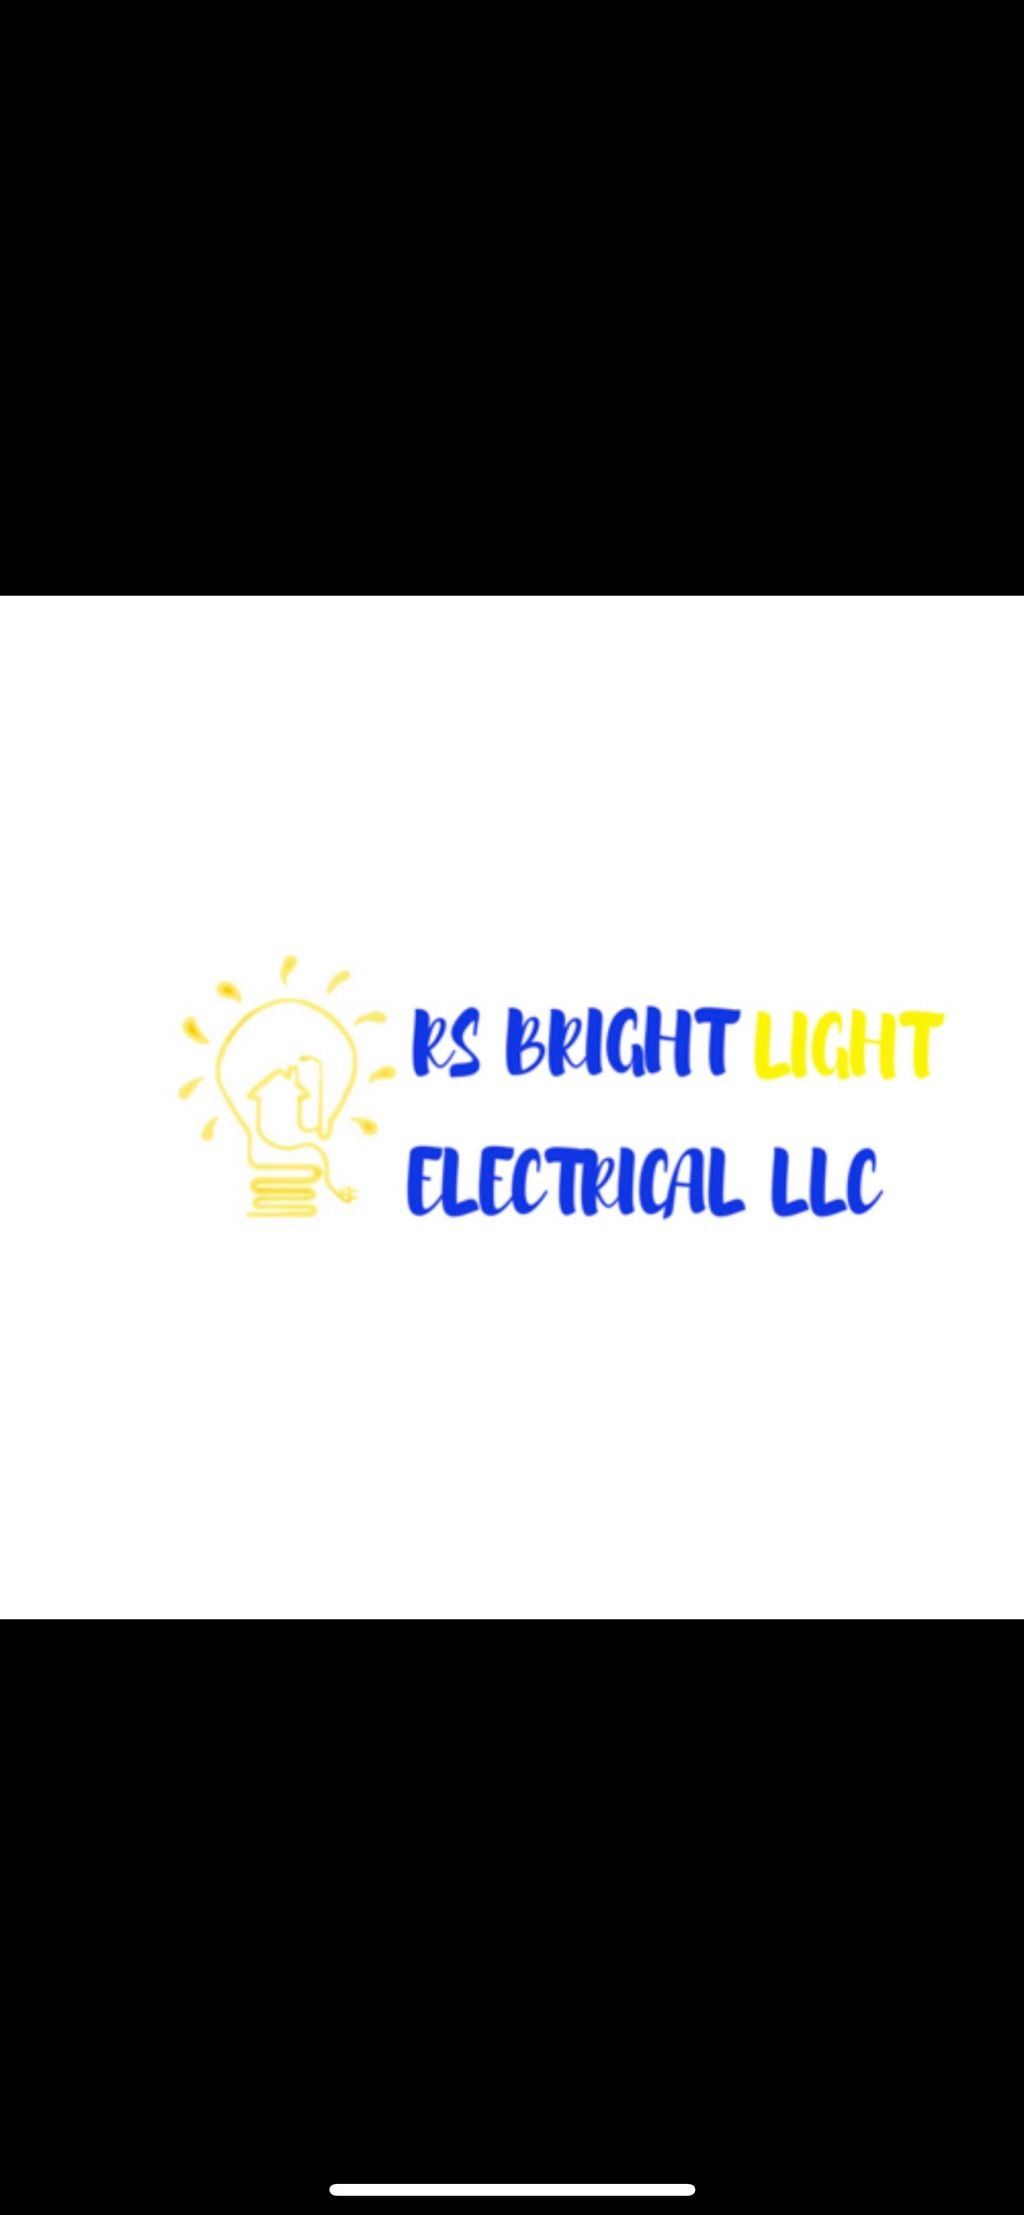 RS bright light electrical llc